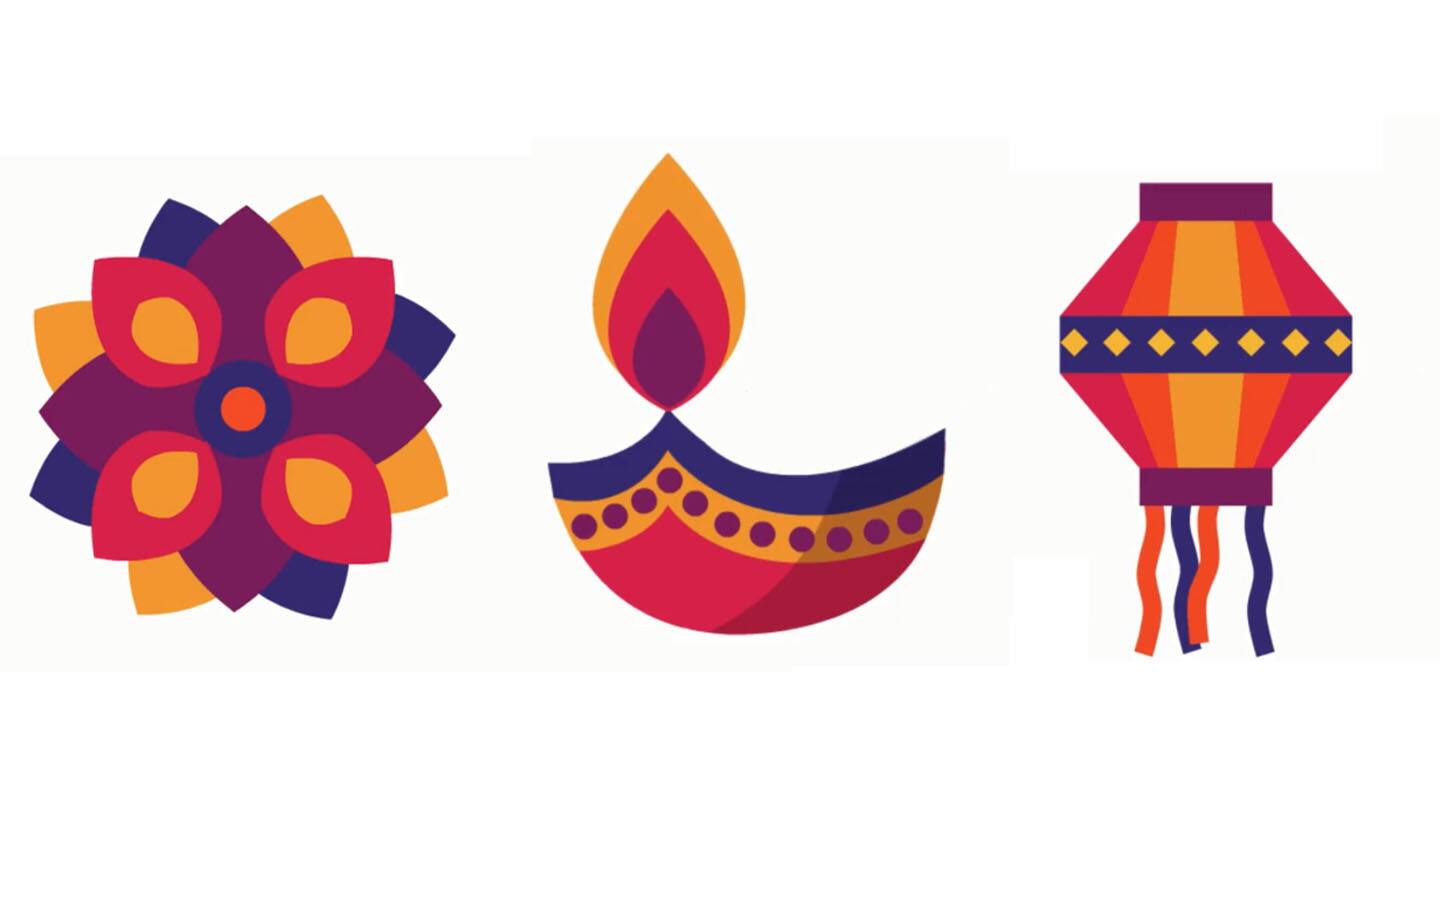 Twitter asks users to choose new #HappyDiwali emoji this year